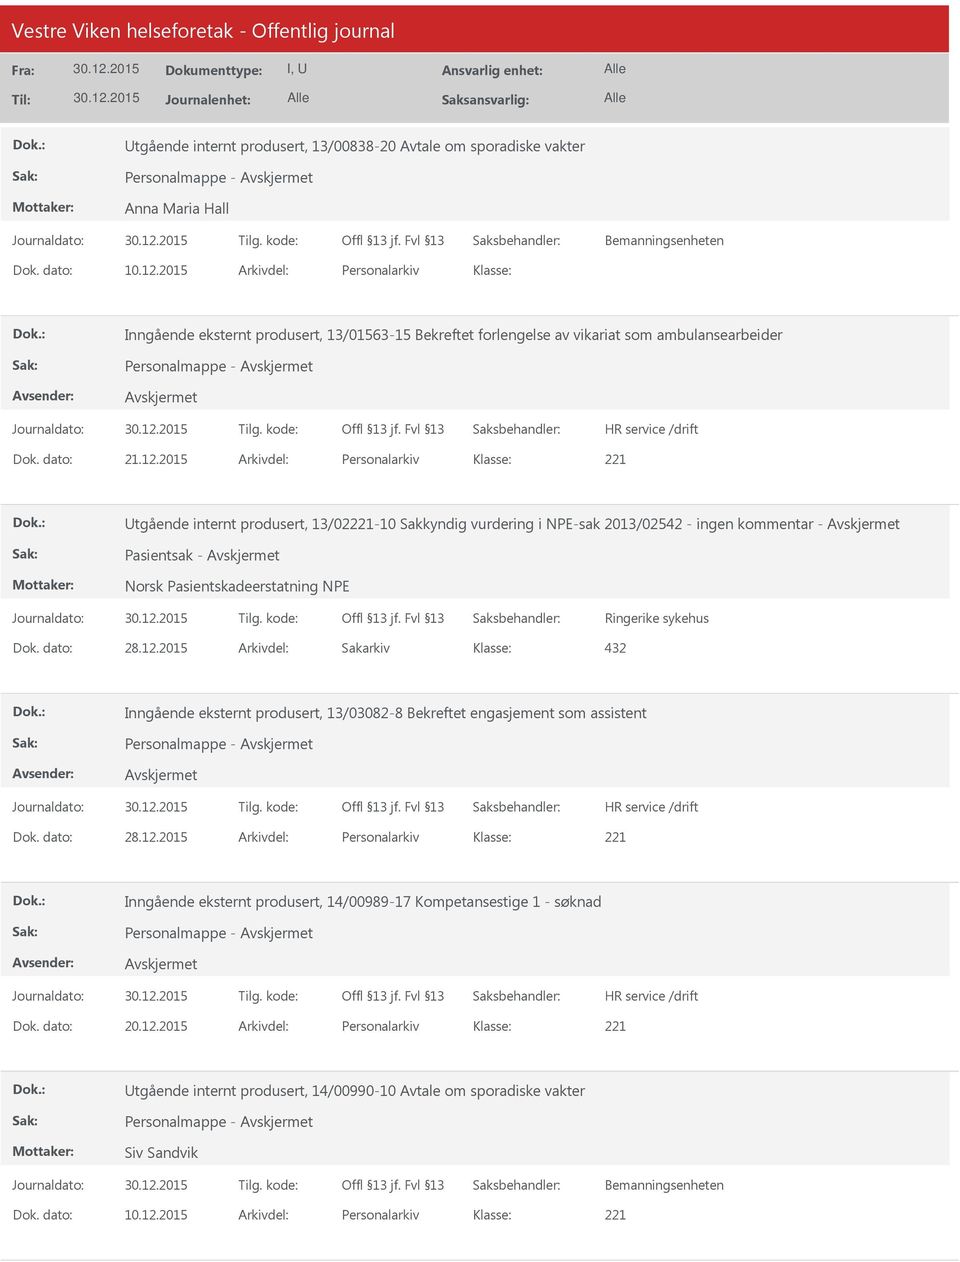 2015 Arkivdel: Personalarkiv tgående internt produsert, 13/02-10 Sakkyndig vurdering i NPE-sak 2013/02542 - ingen kommentar - Pasientsak - Norsk Pasientskadeerstatning NPE Ringerike sykehus 432